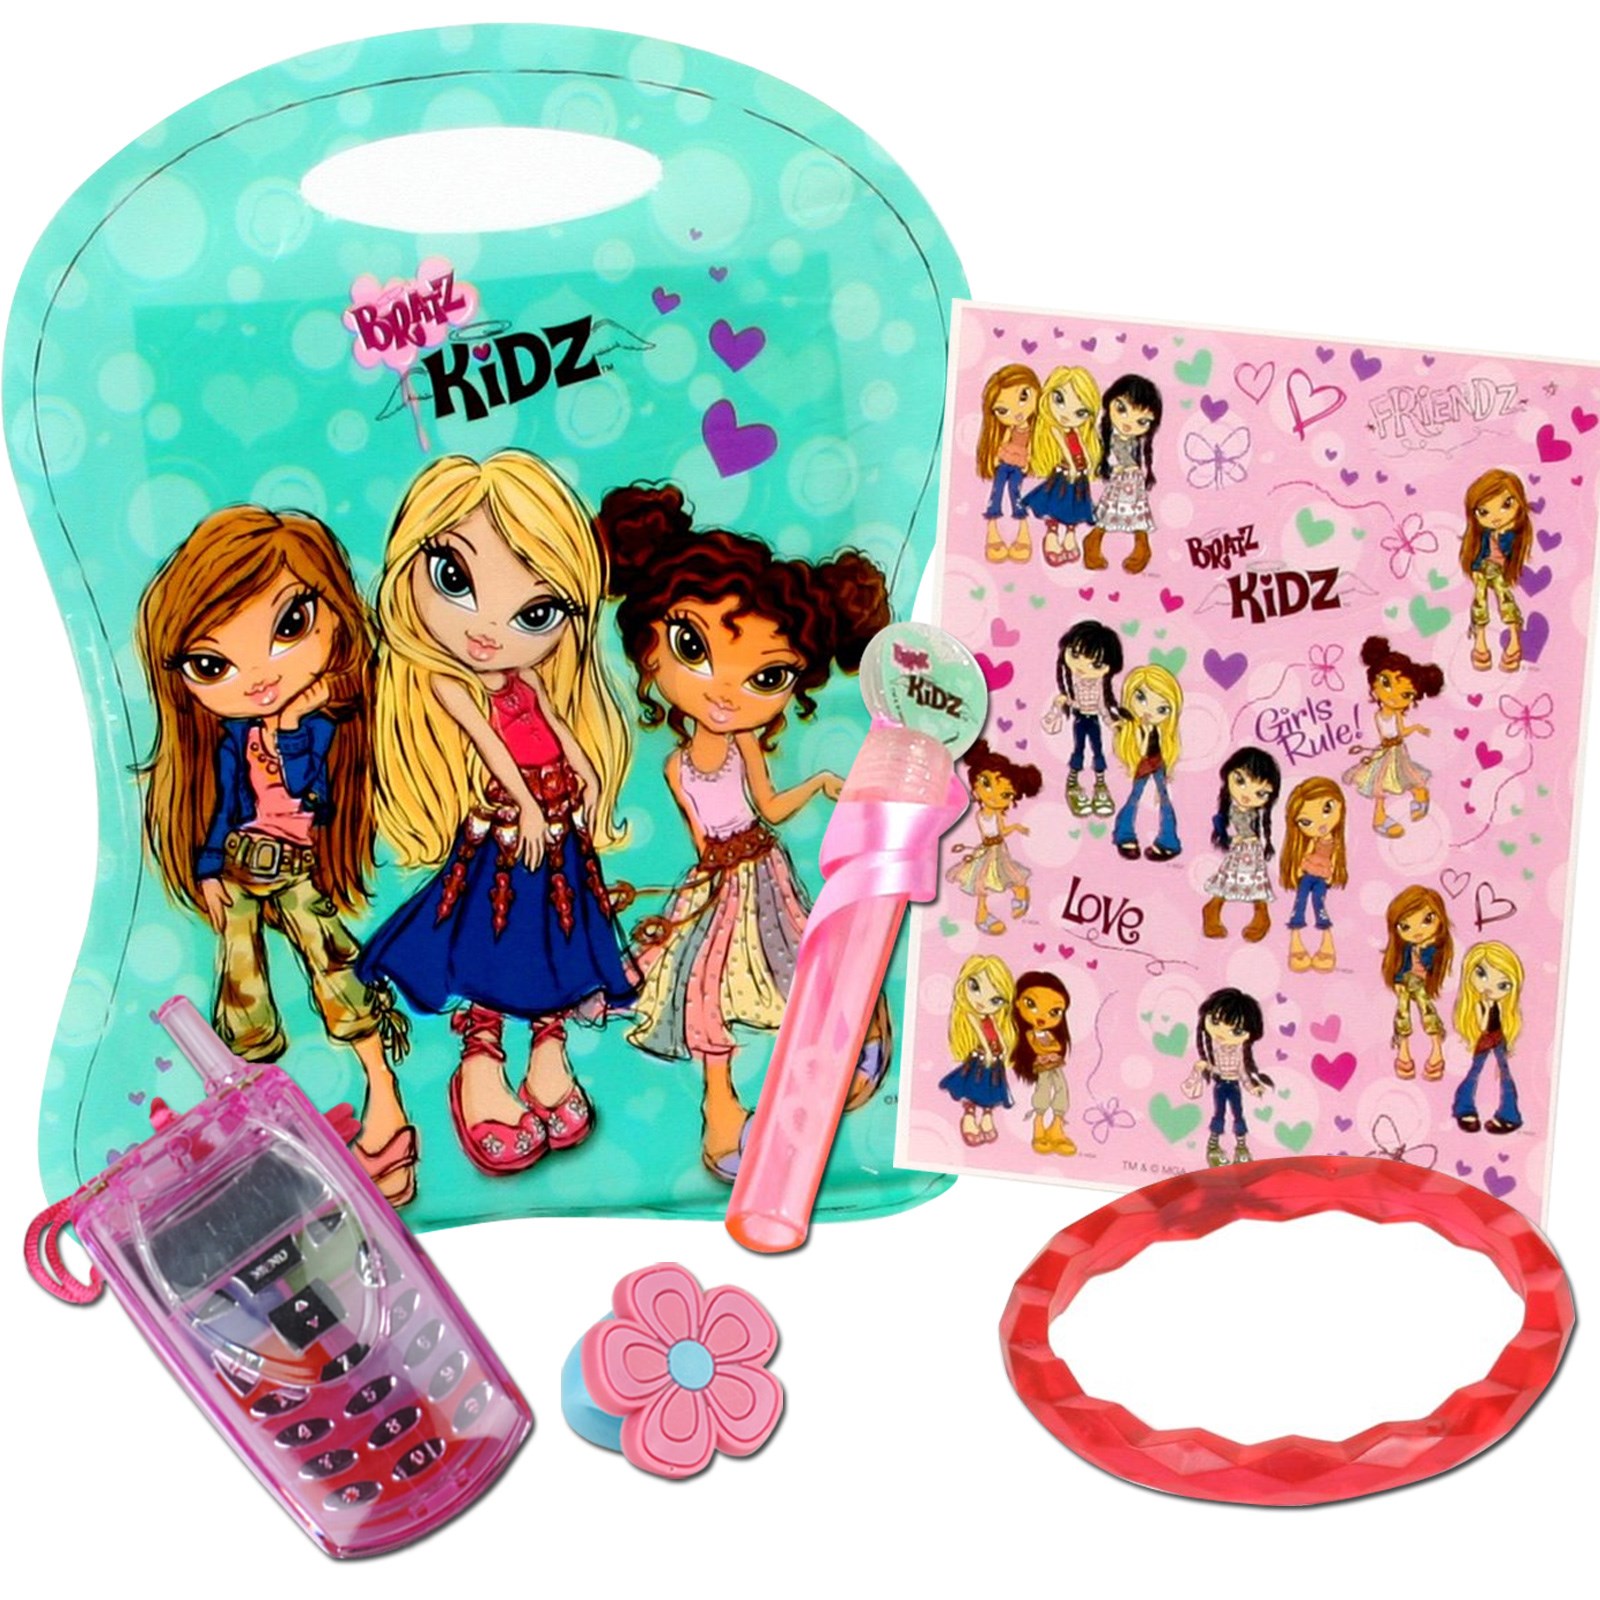 Bratz Kidz Party Favors Kits